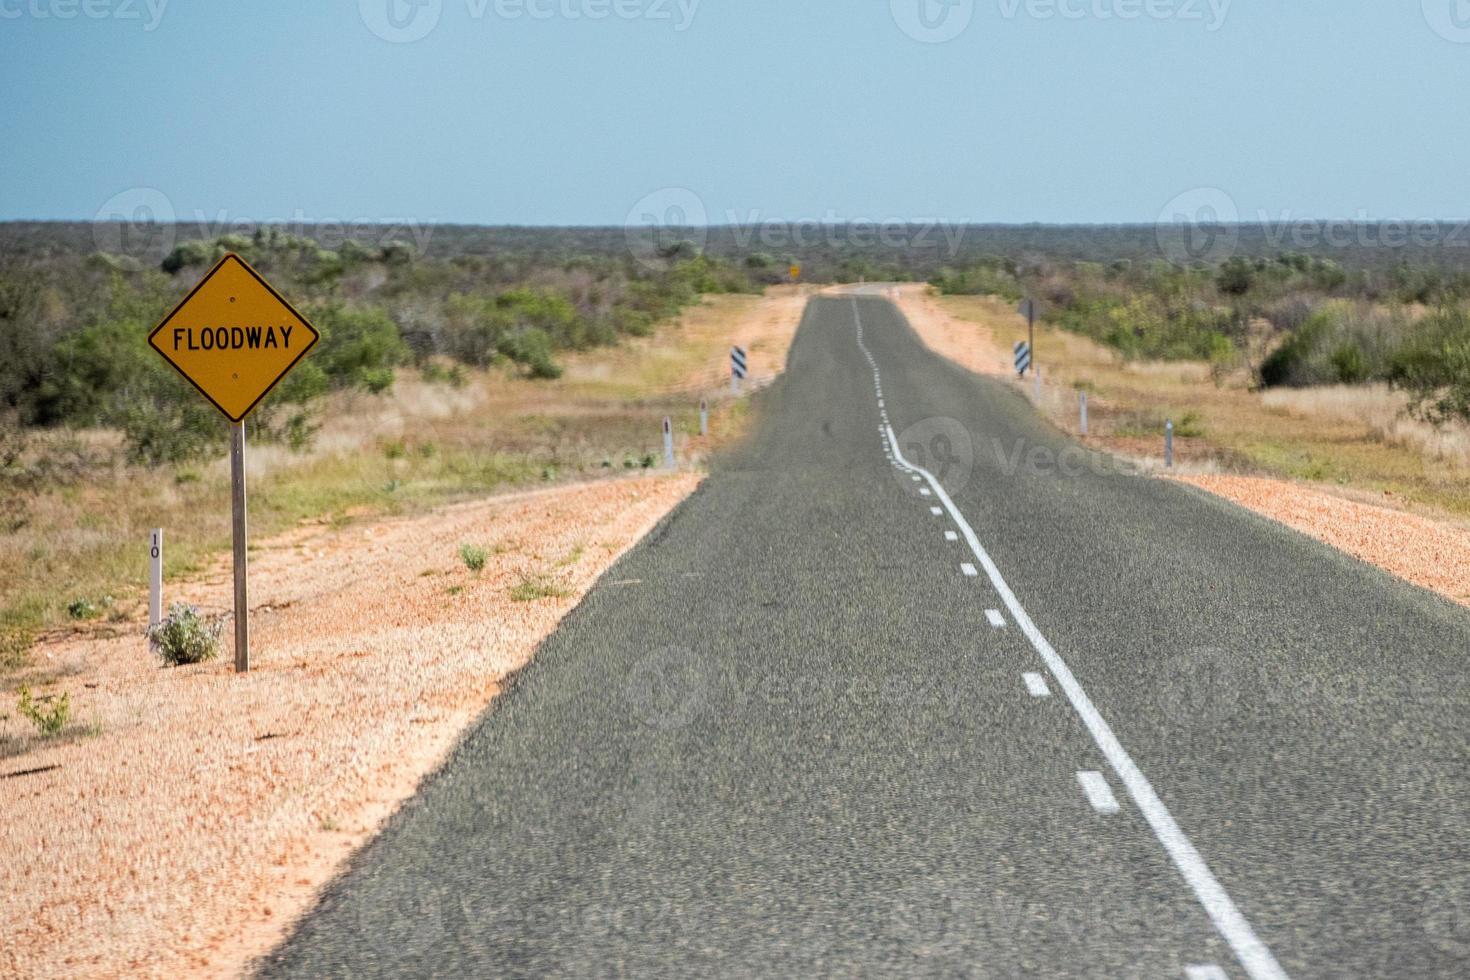 Floodway sign West Australia Desert endless road photo